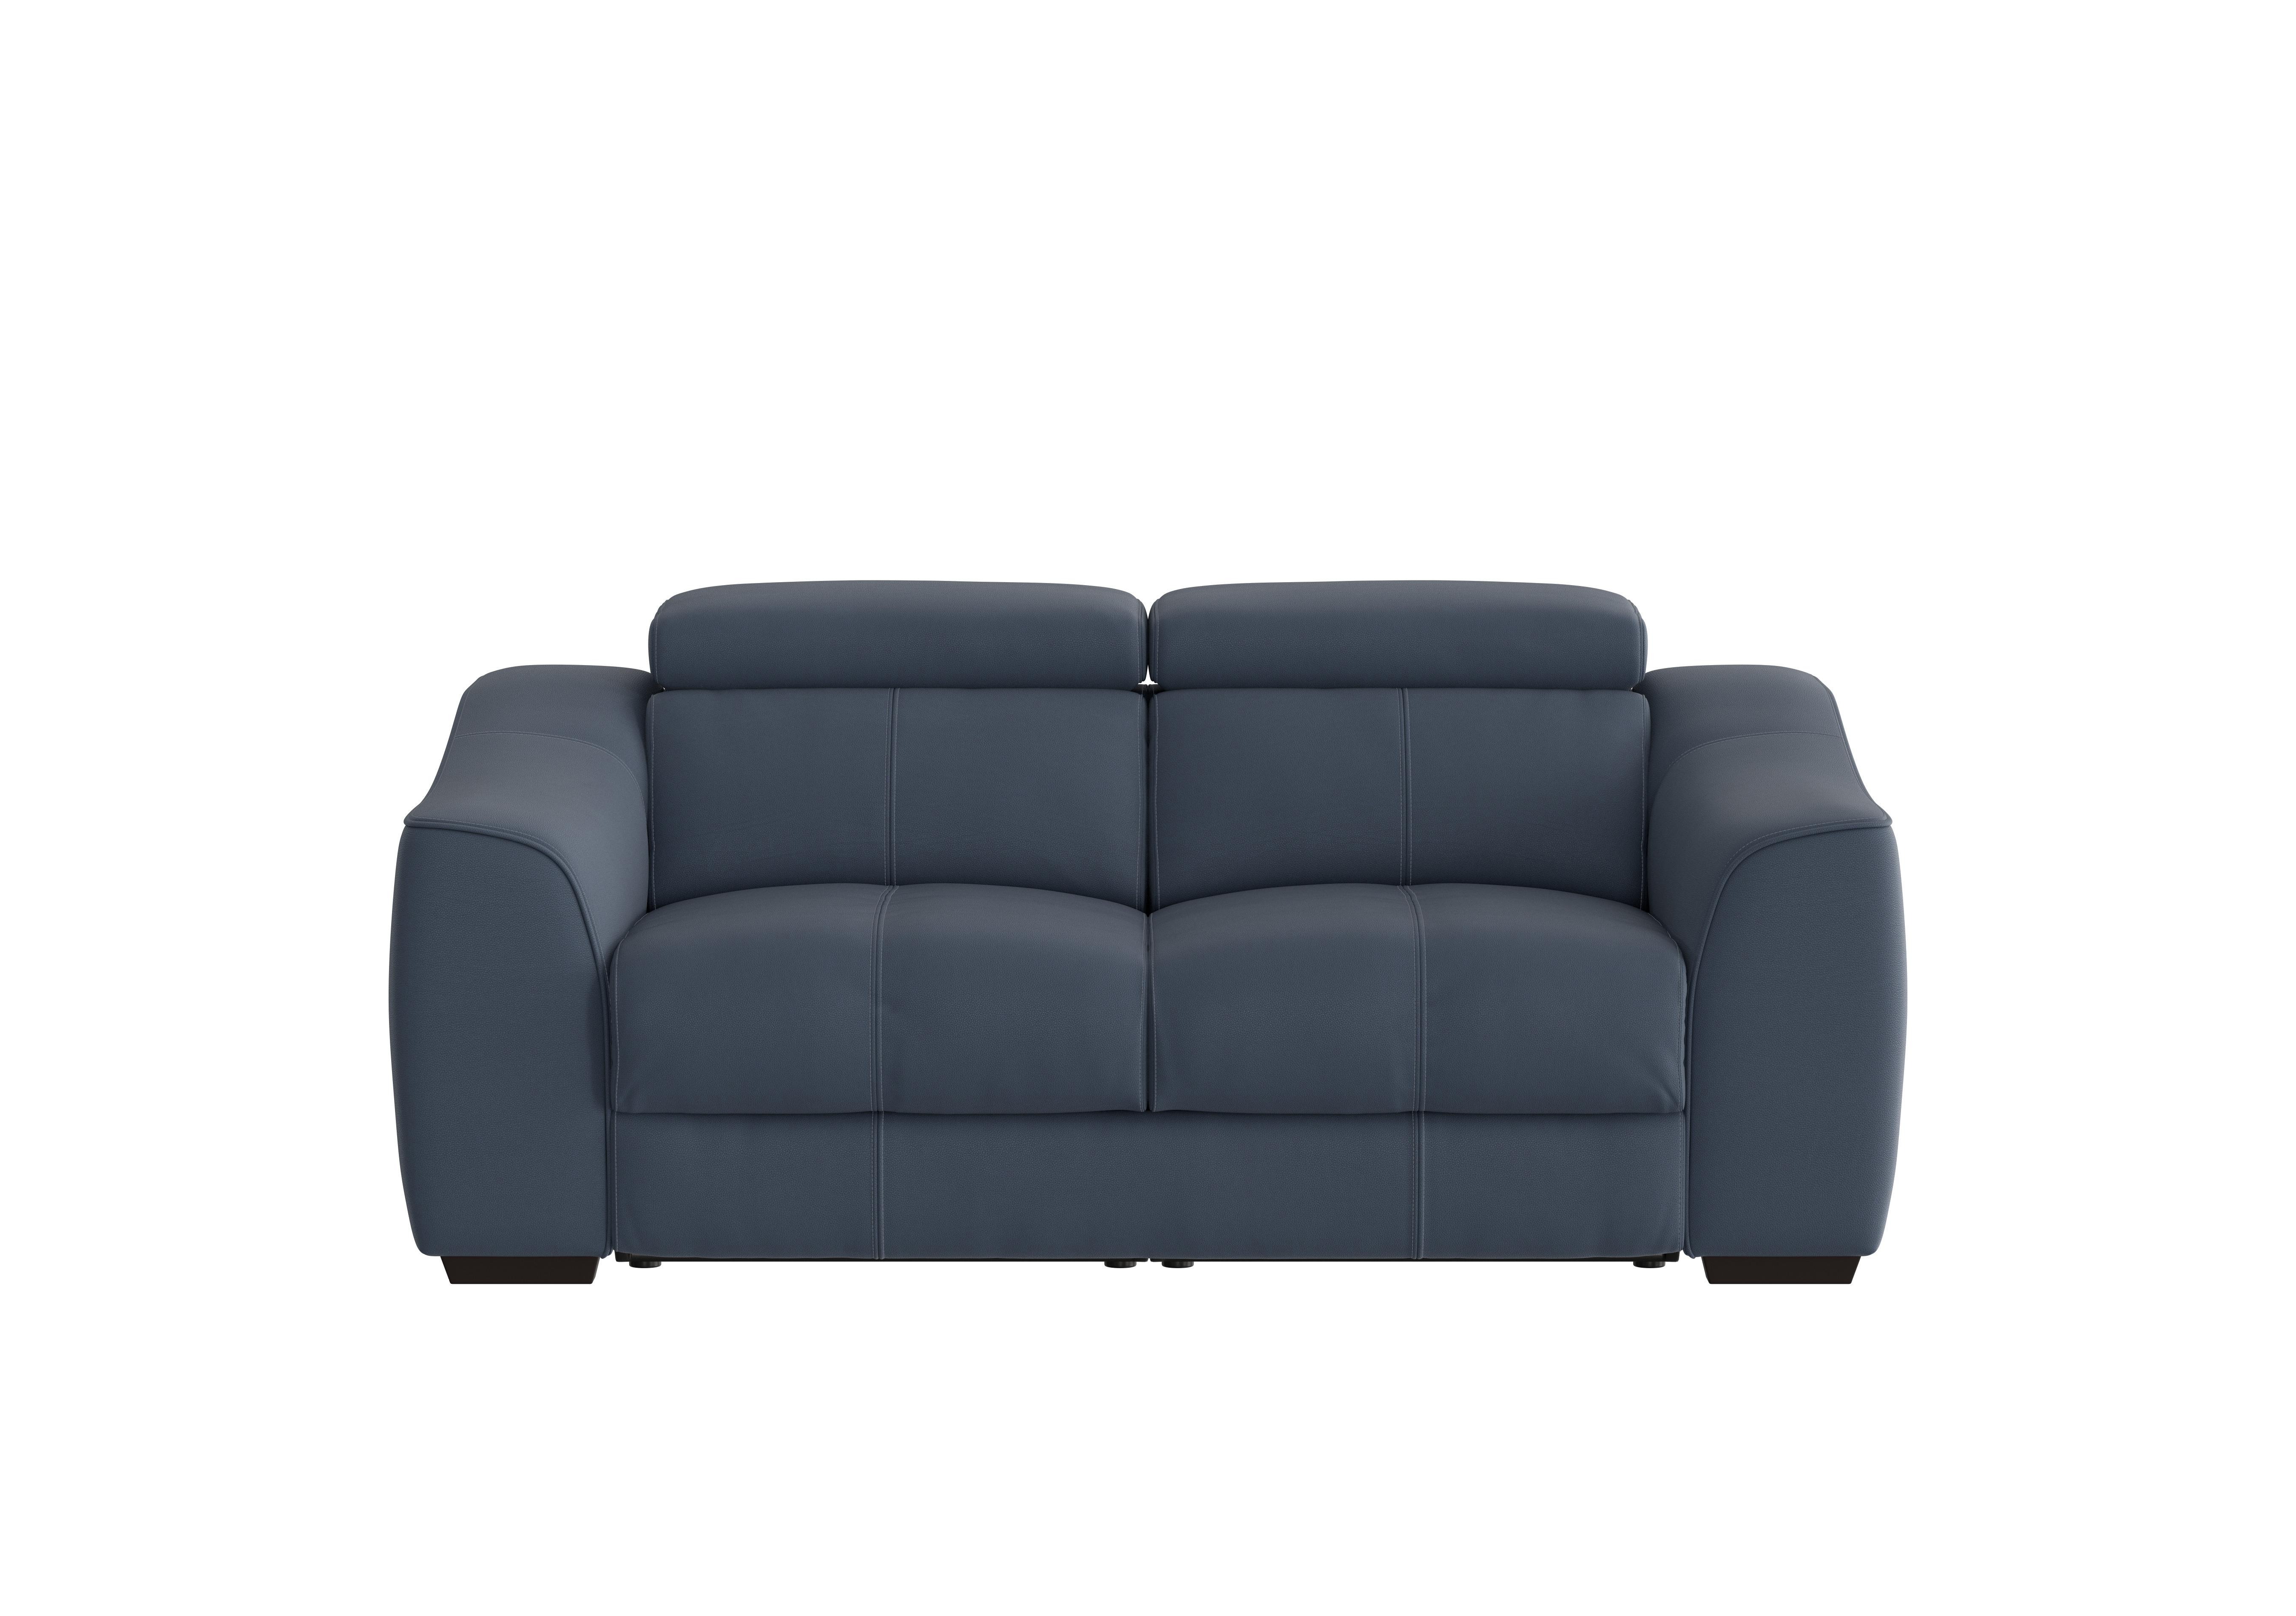 Elixir 2 Seater Leather Sofa in Bv-313e Ocean Blue on Furniture Village